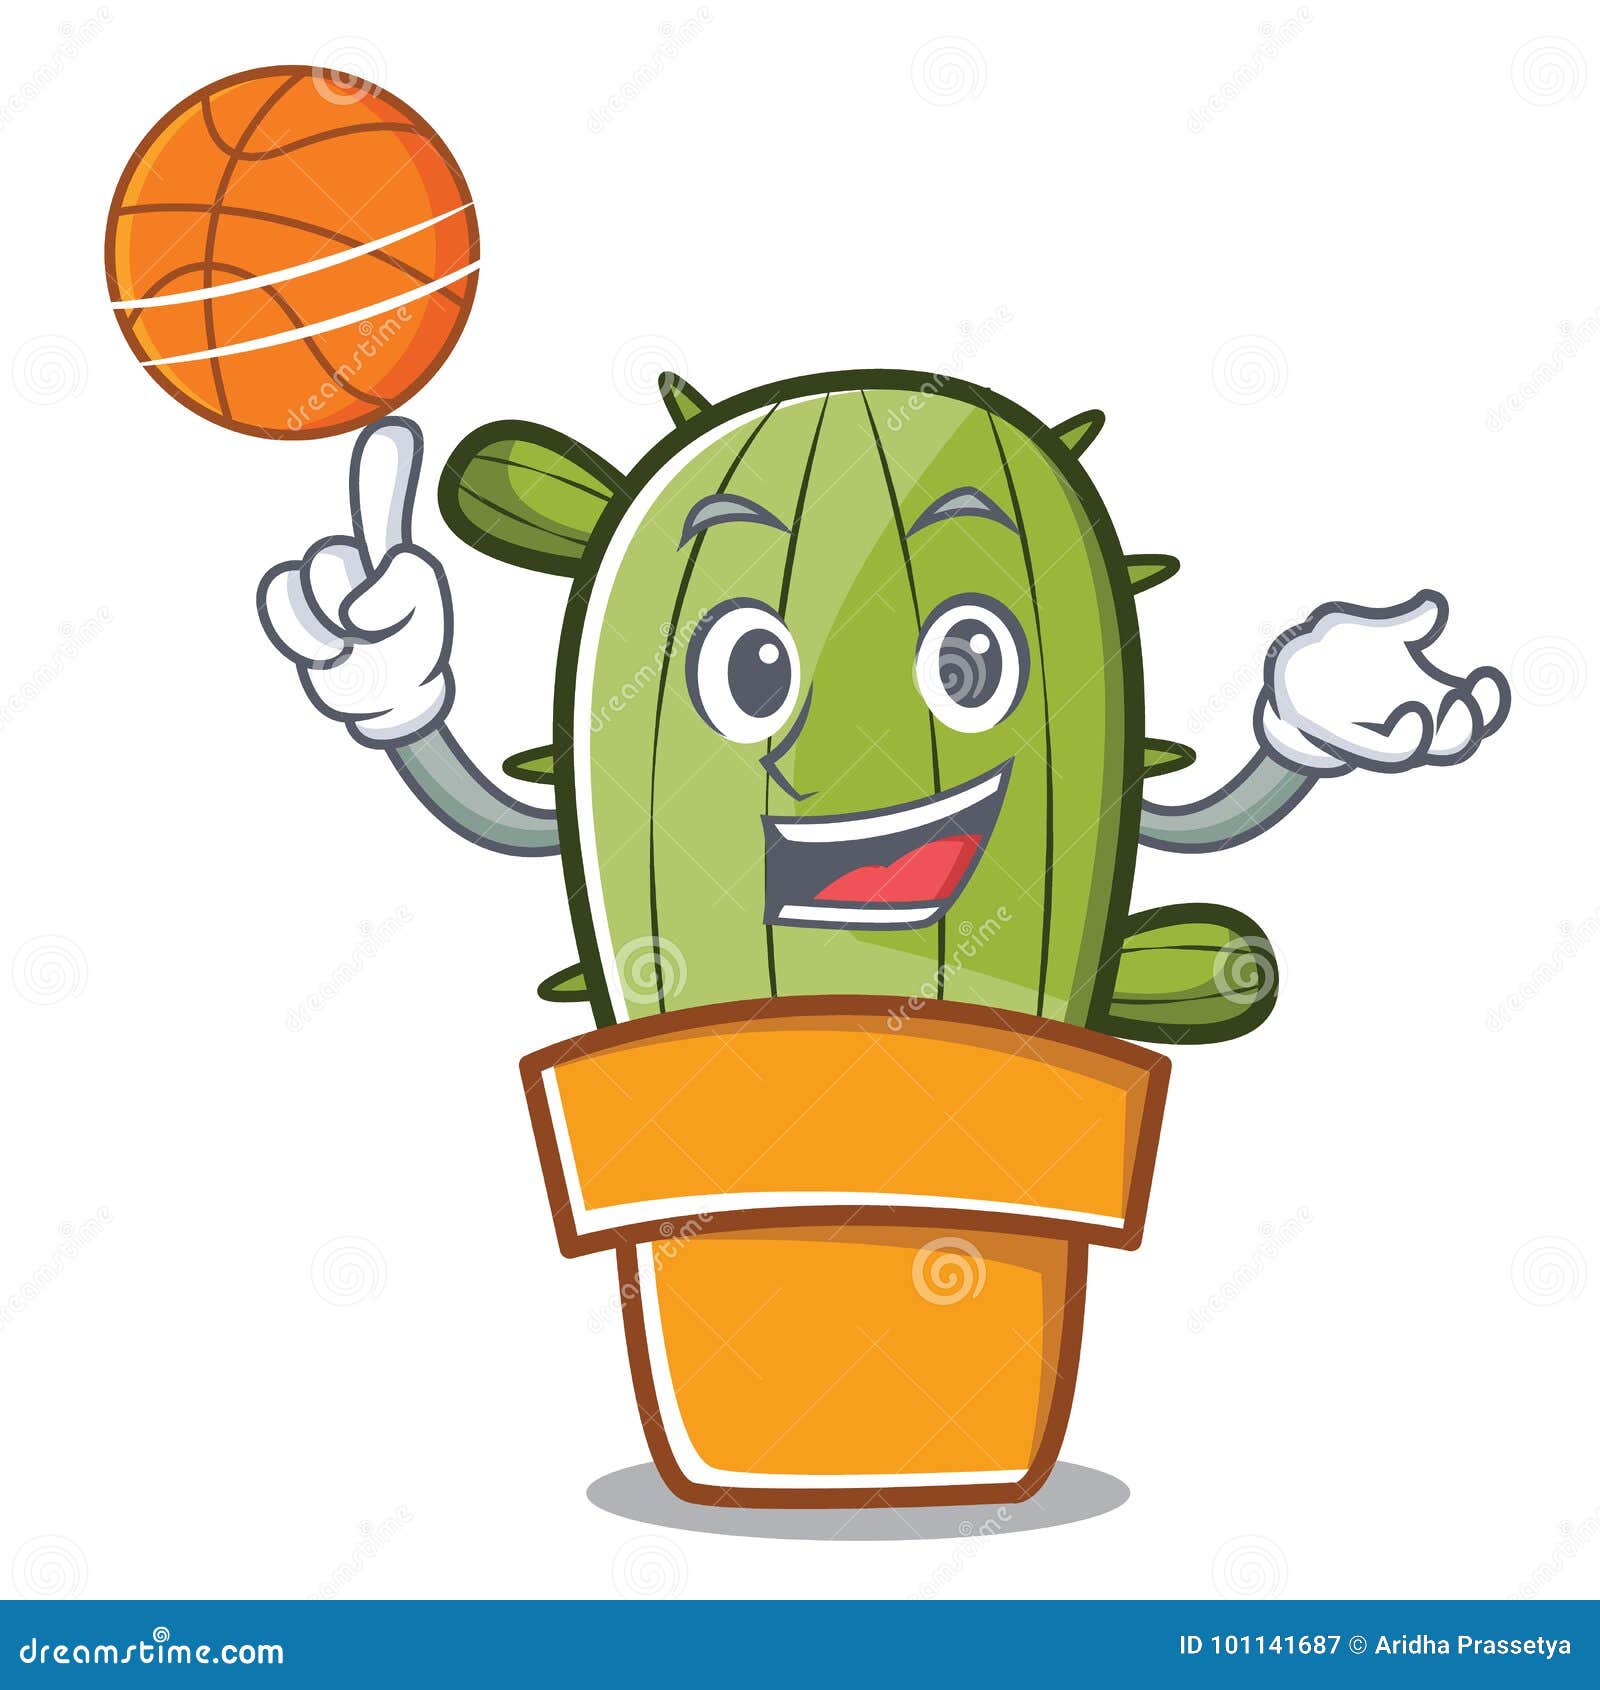 Playing Basketball Cute Cactus Character Cartoon Stock Vector